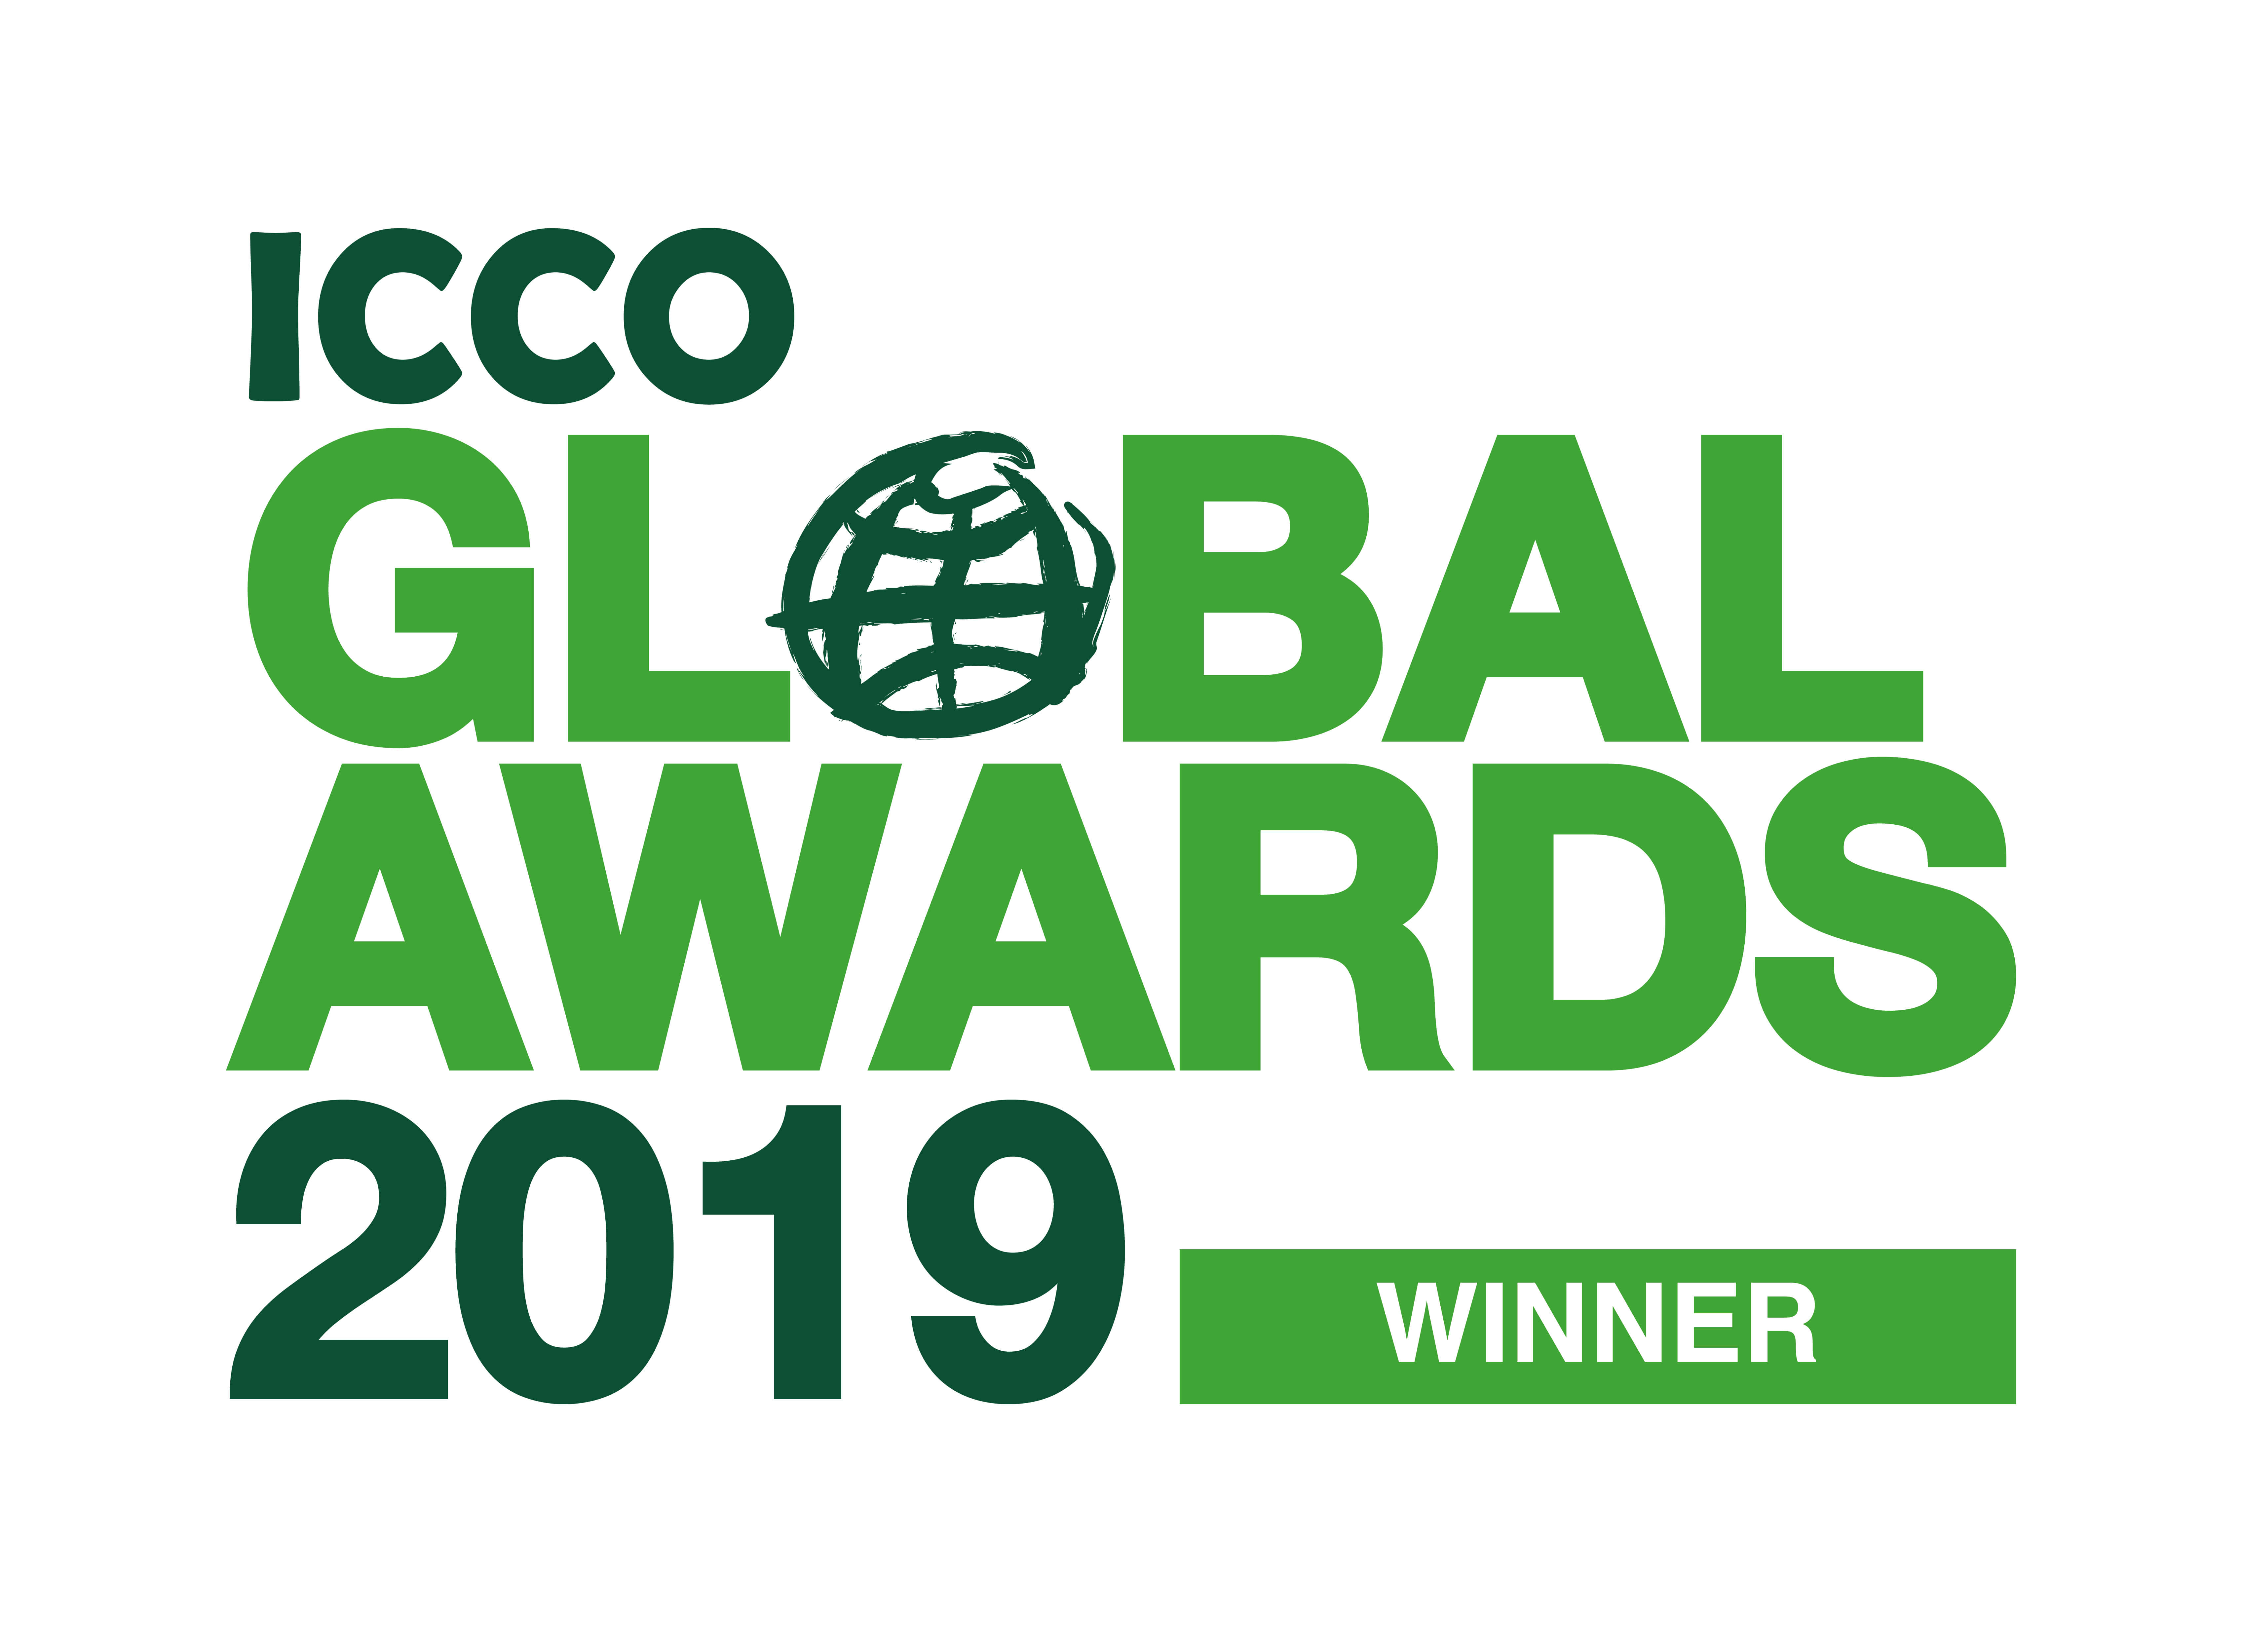 Winners award for the ICCO Global Awards 2019.